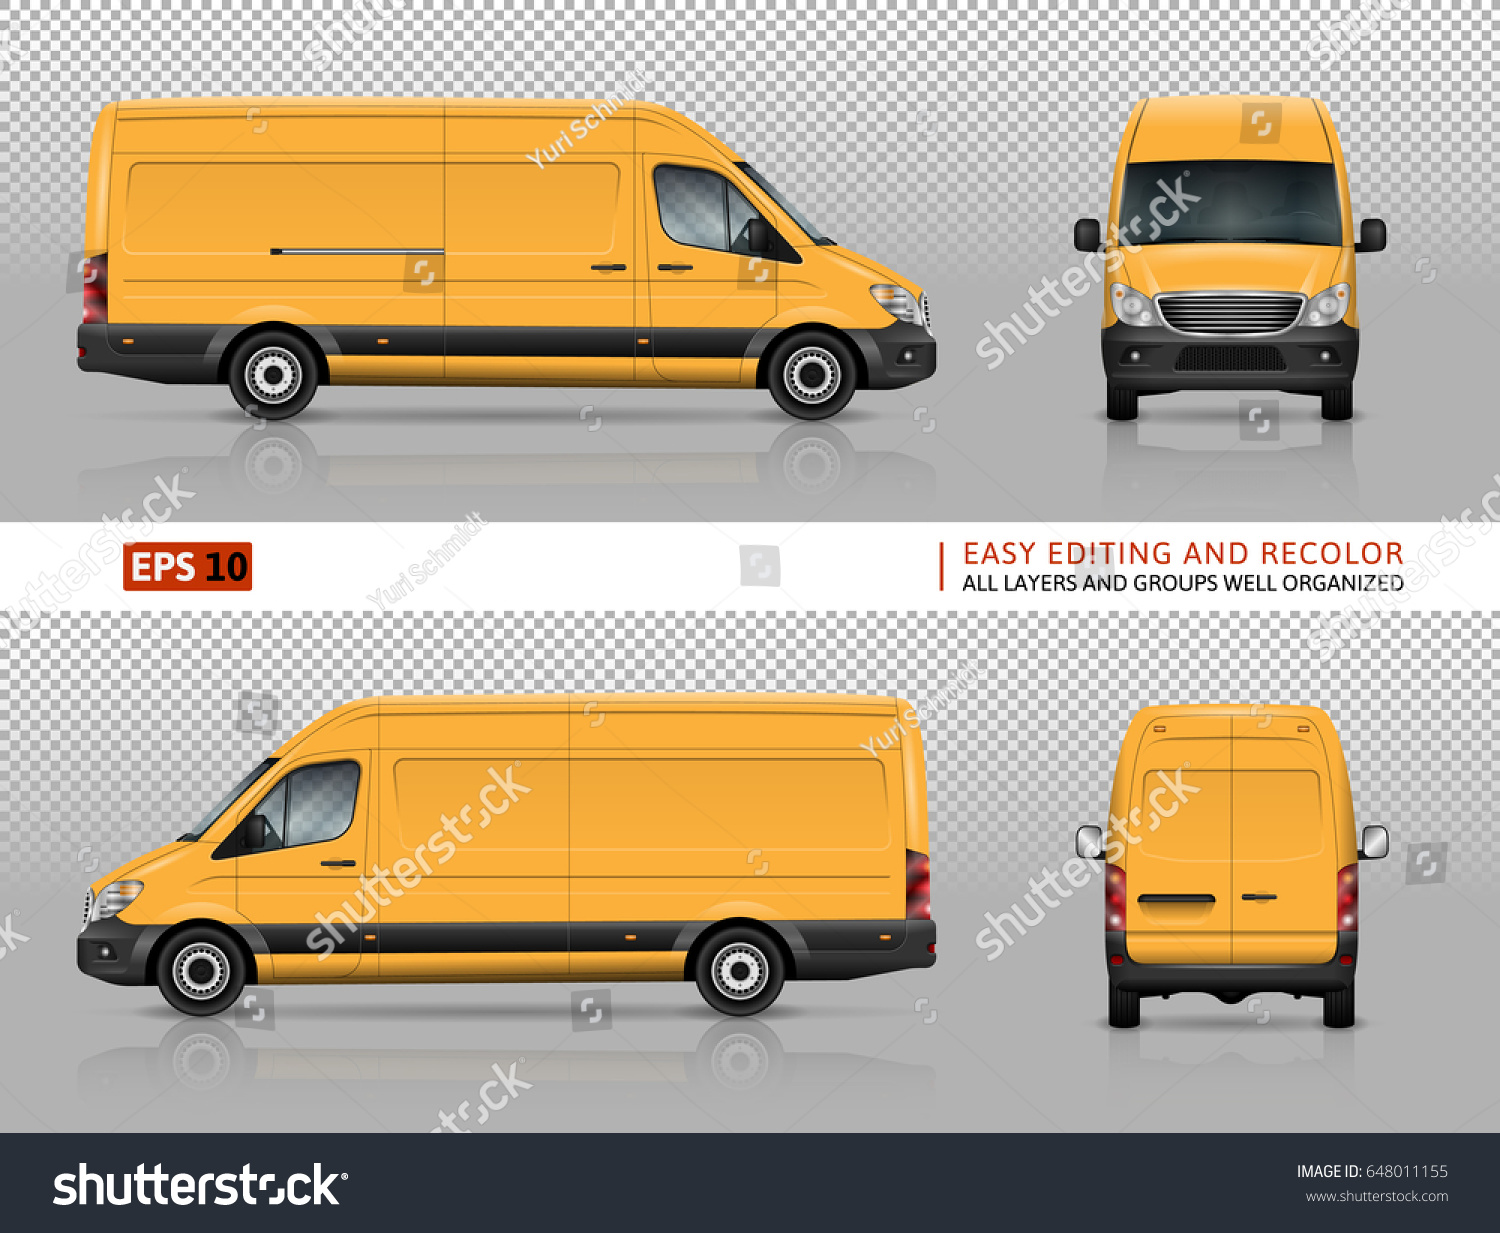 Yellow Van Vector Mockup Car Branding Stock Vector Royalty Free 648011155